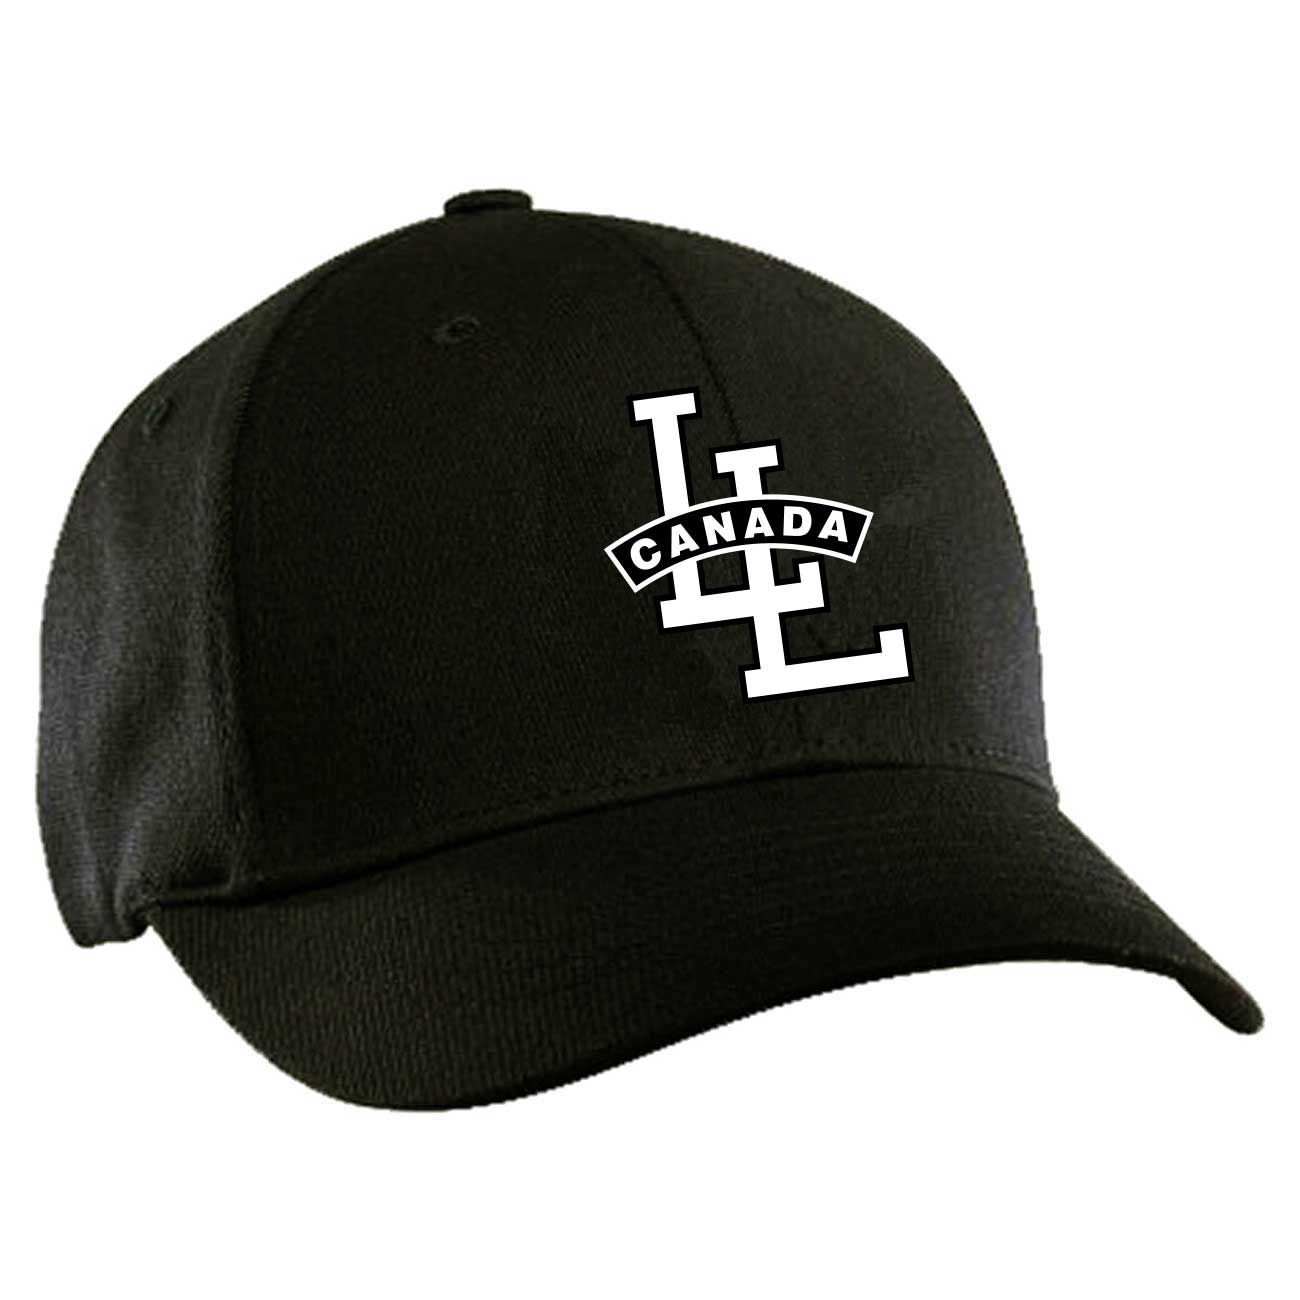 Little League Canada New Era Combo Umpire Hat